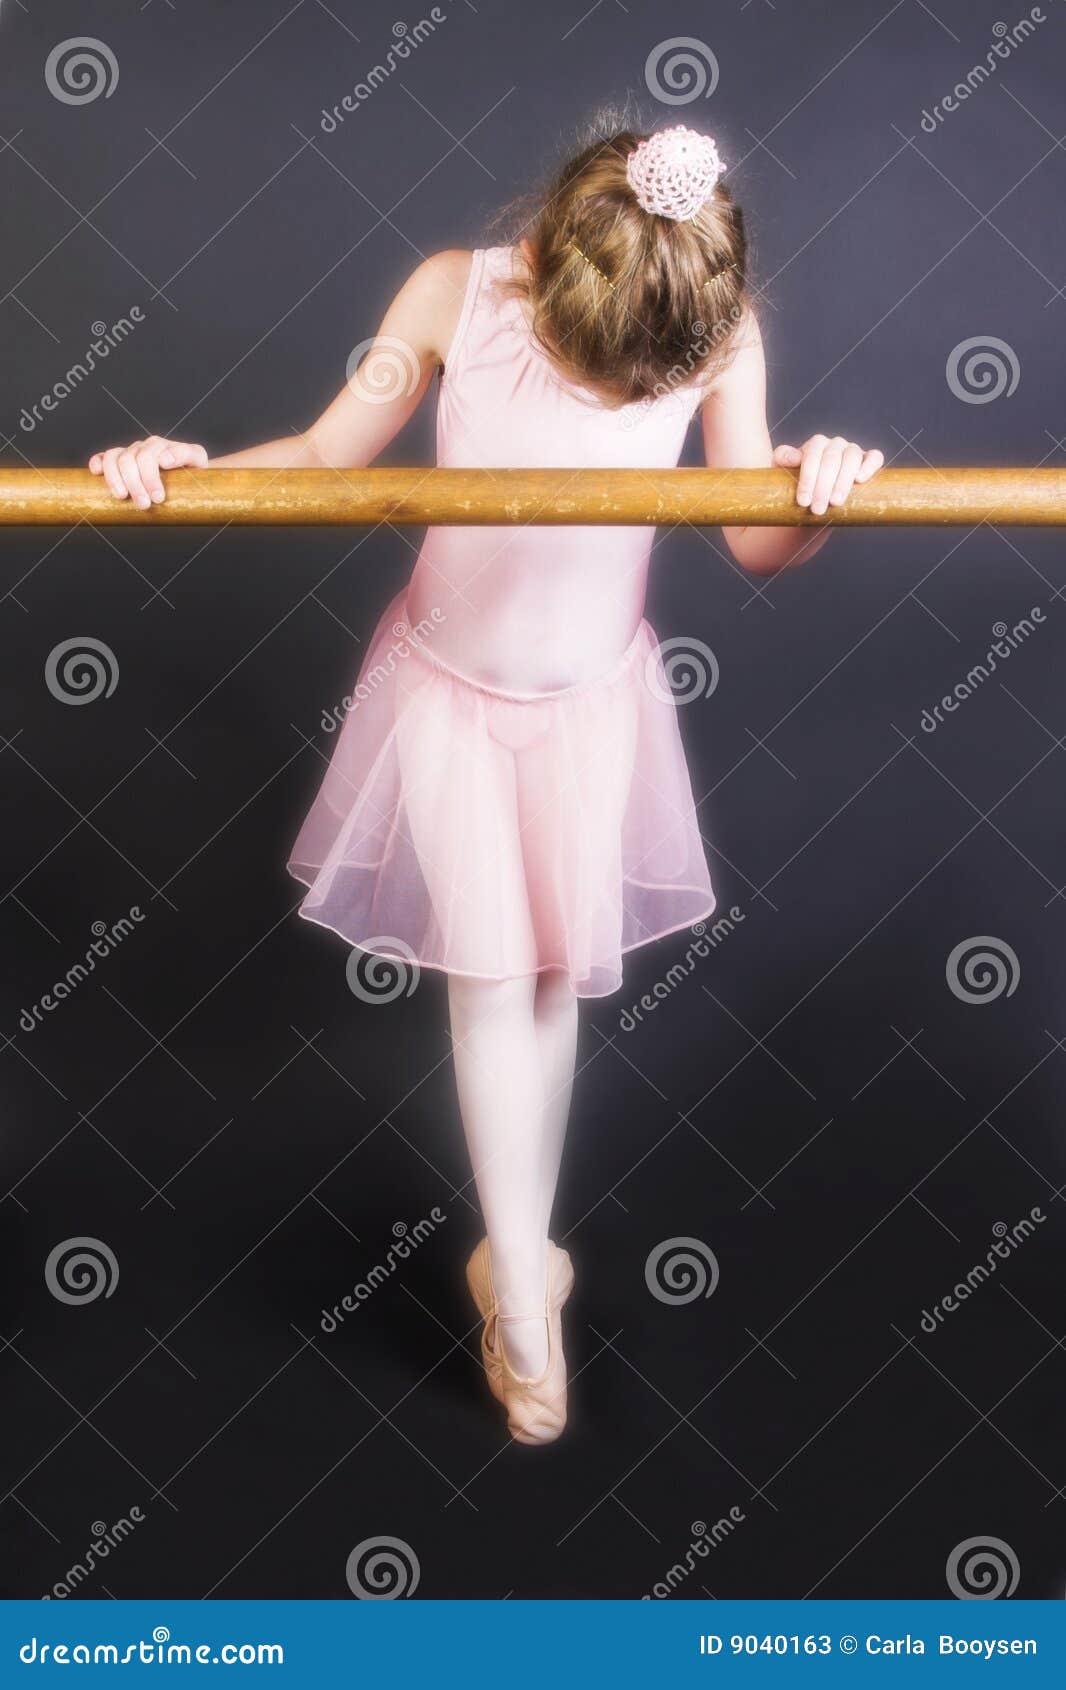 Tiny Ballerina image. Image accessories, dance - 9040163